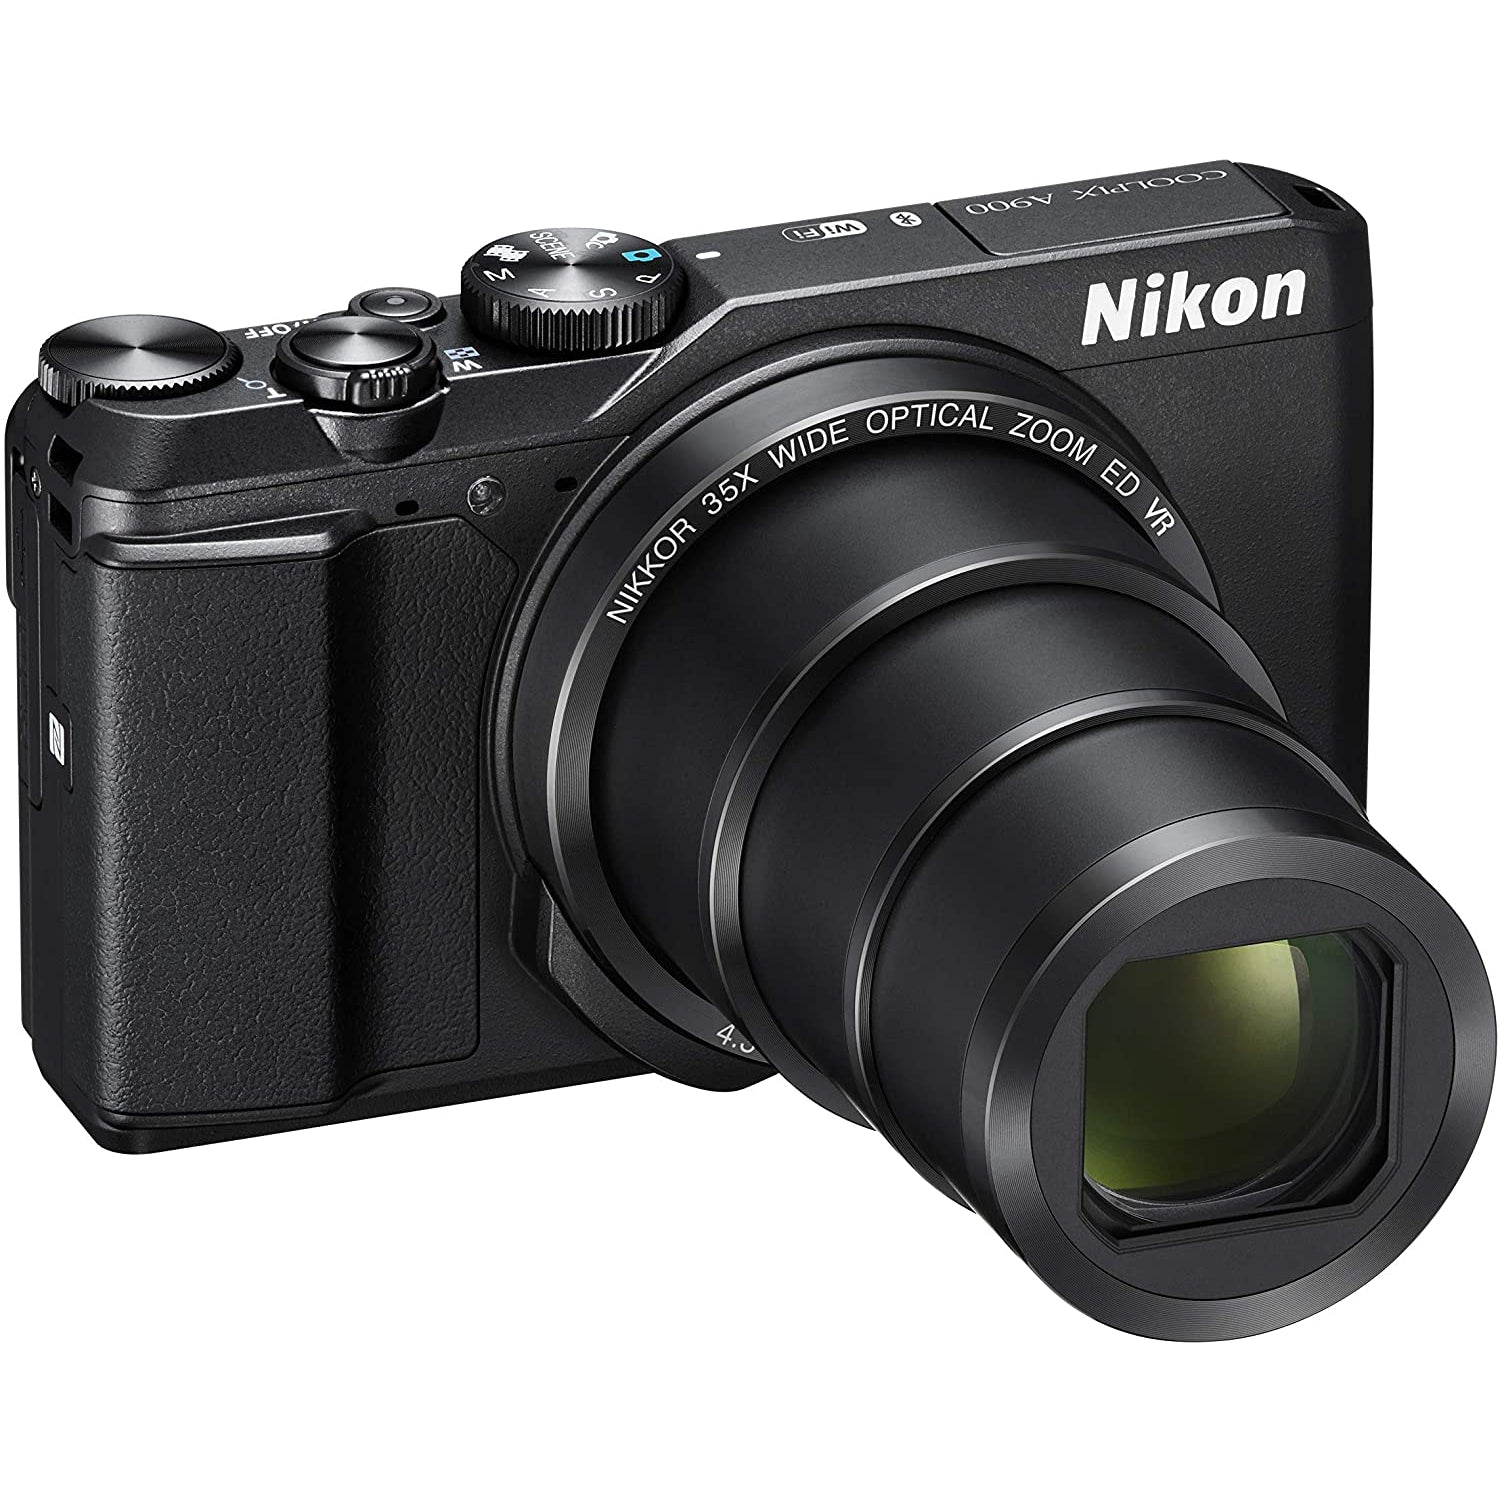 Nikon Coolpix A900 Compact System Camera - Black